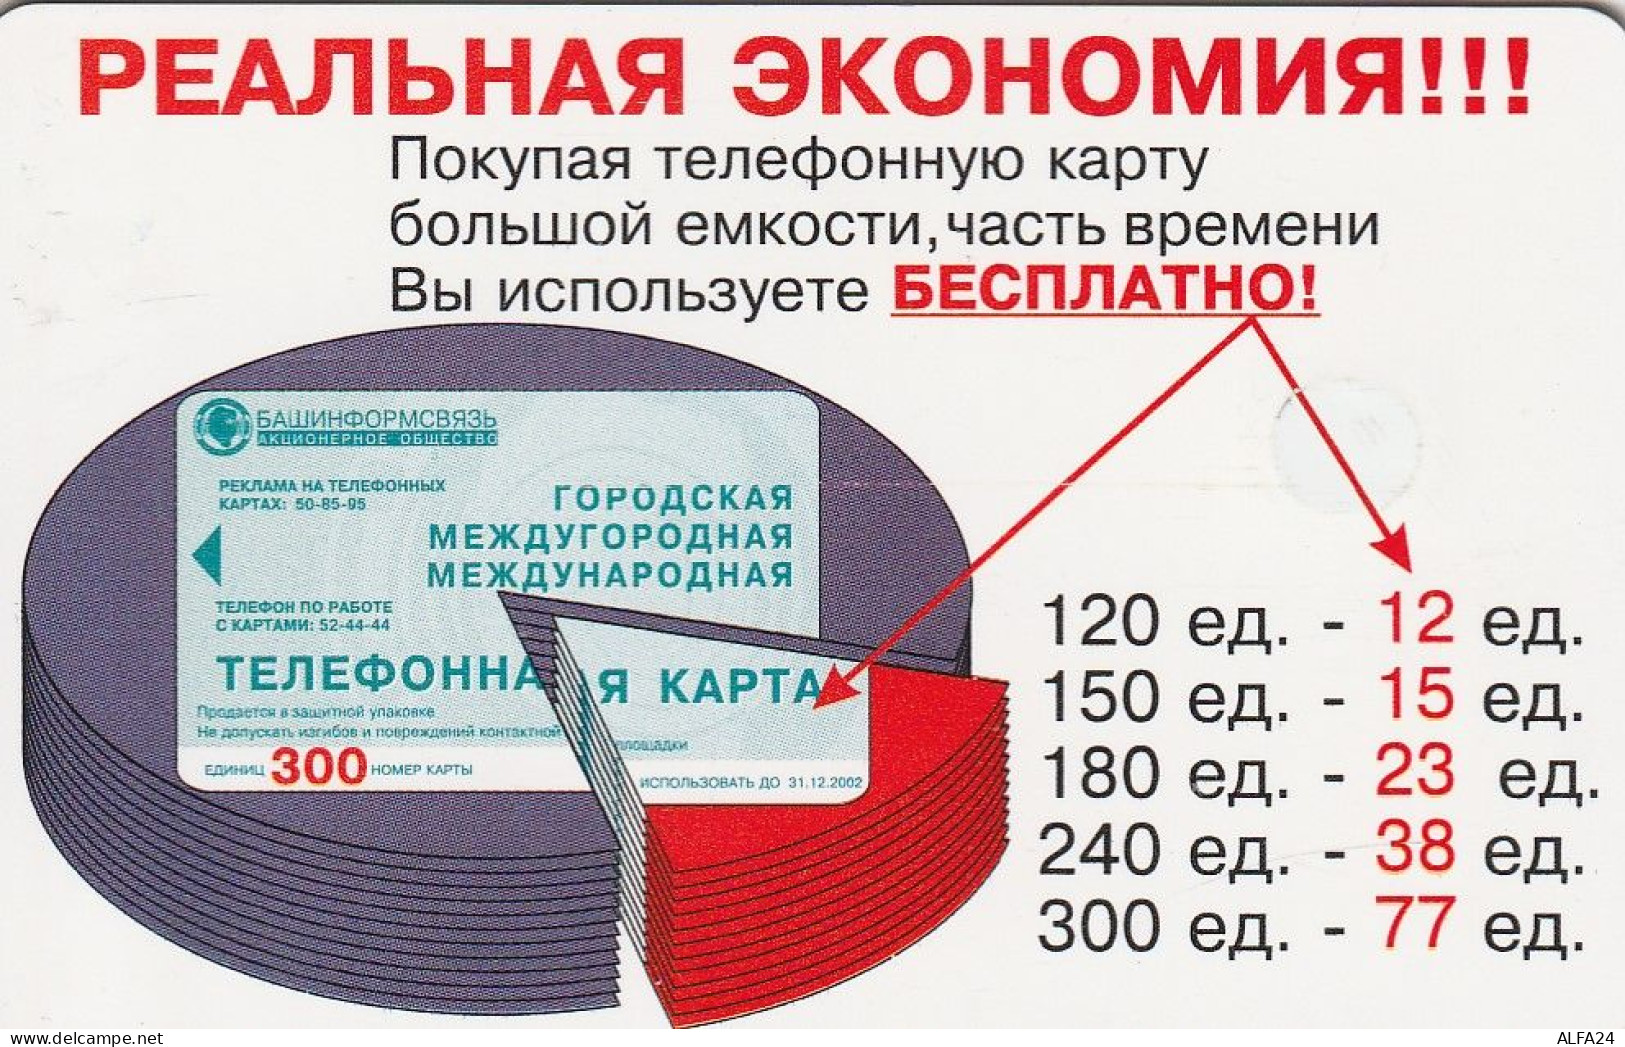 PHONE CARD RUSSIA Bashinformsvyaz - Ufa (E9.25.7 - Russia